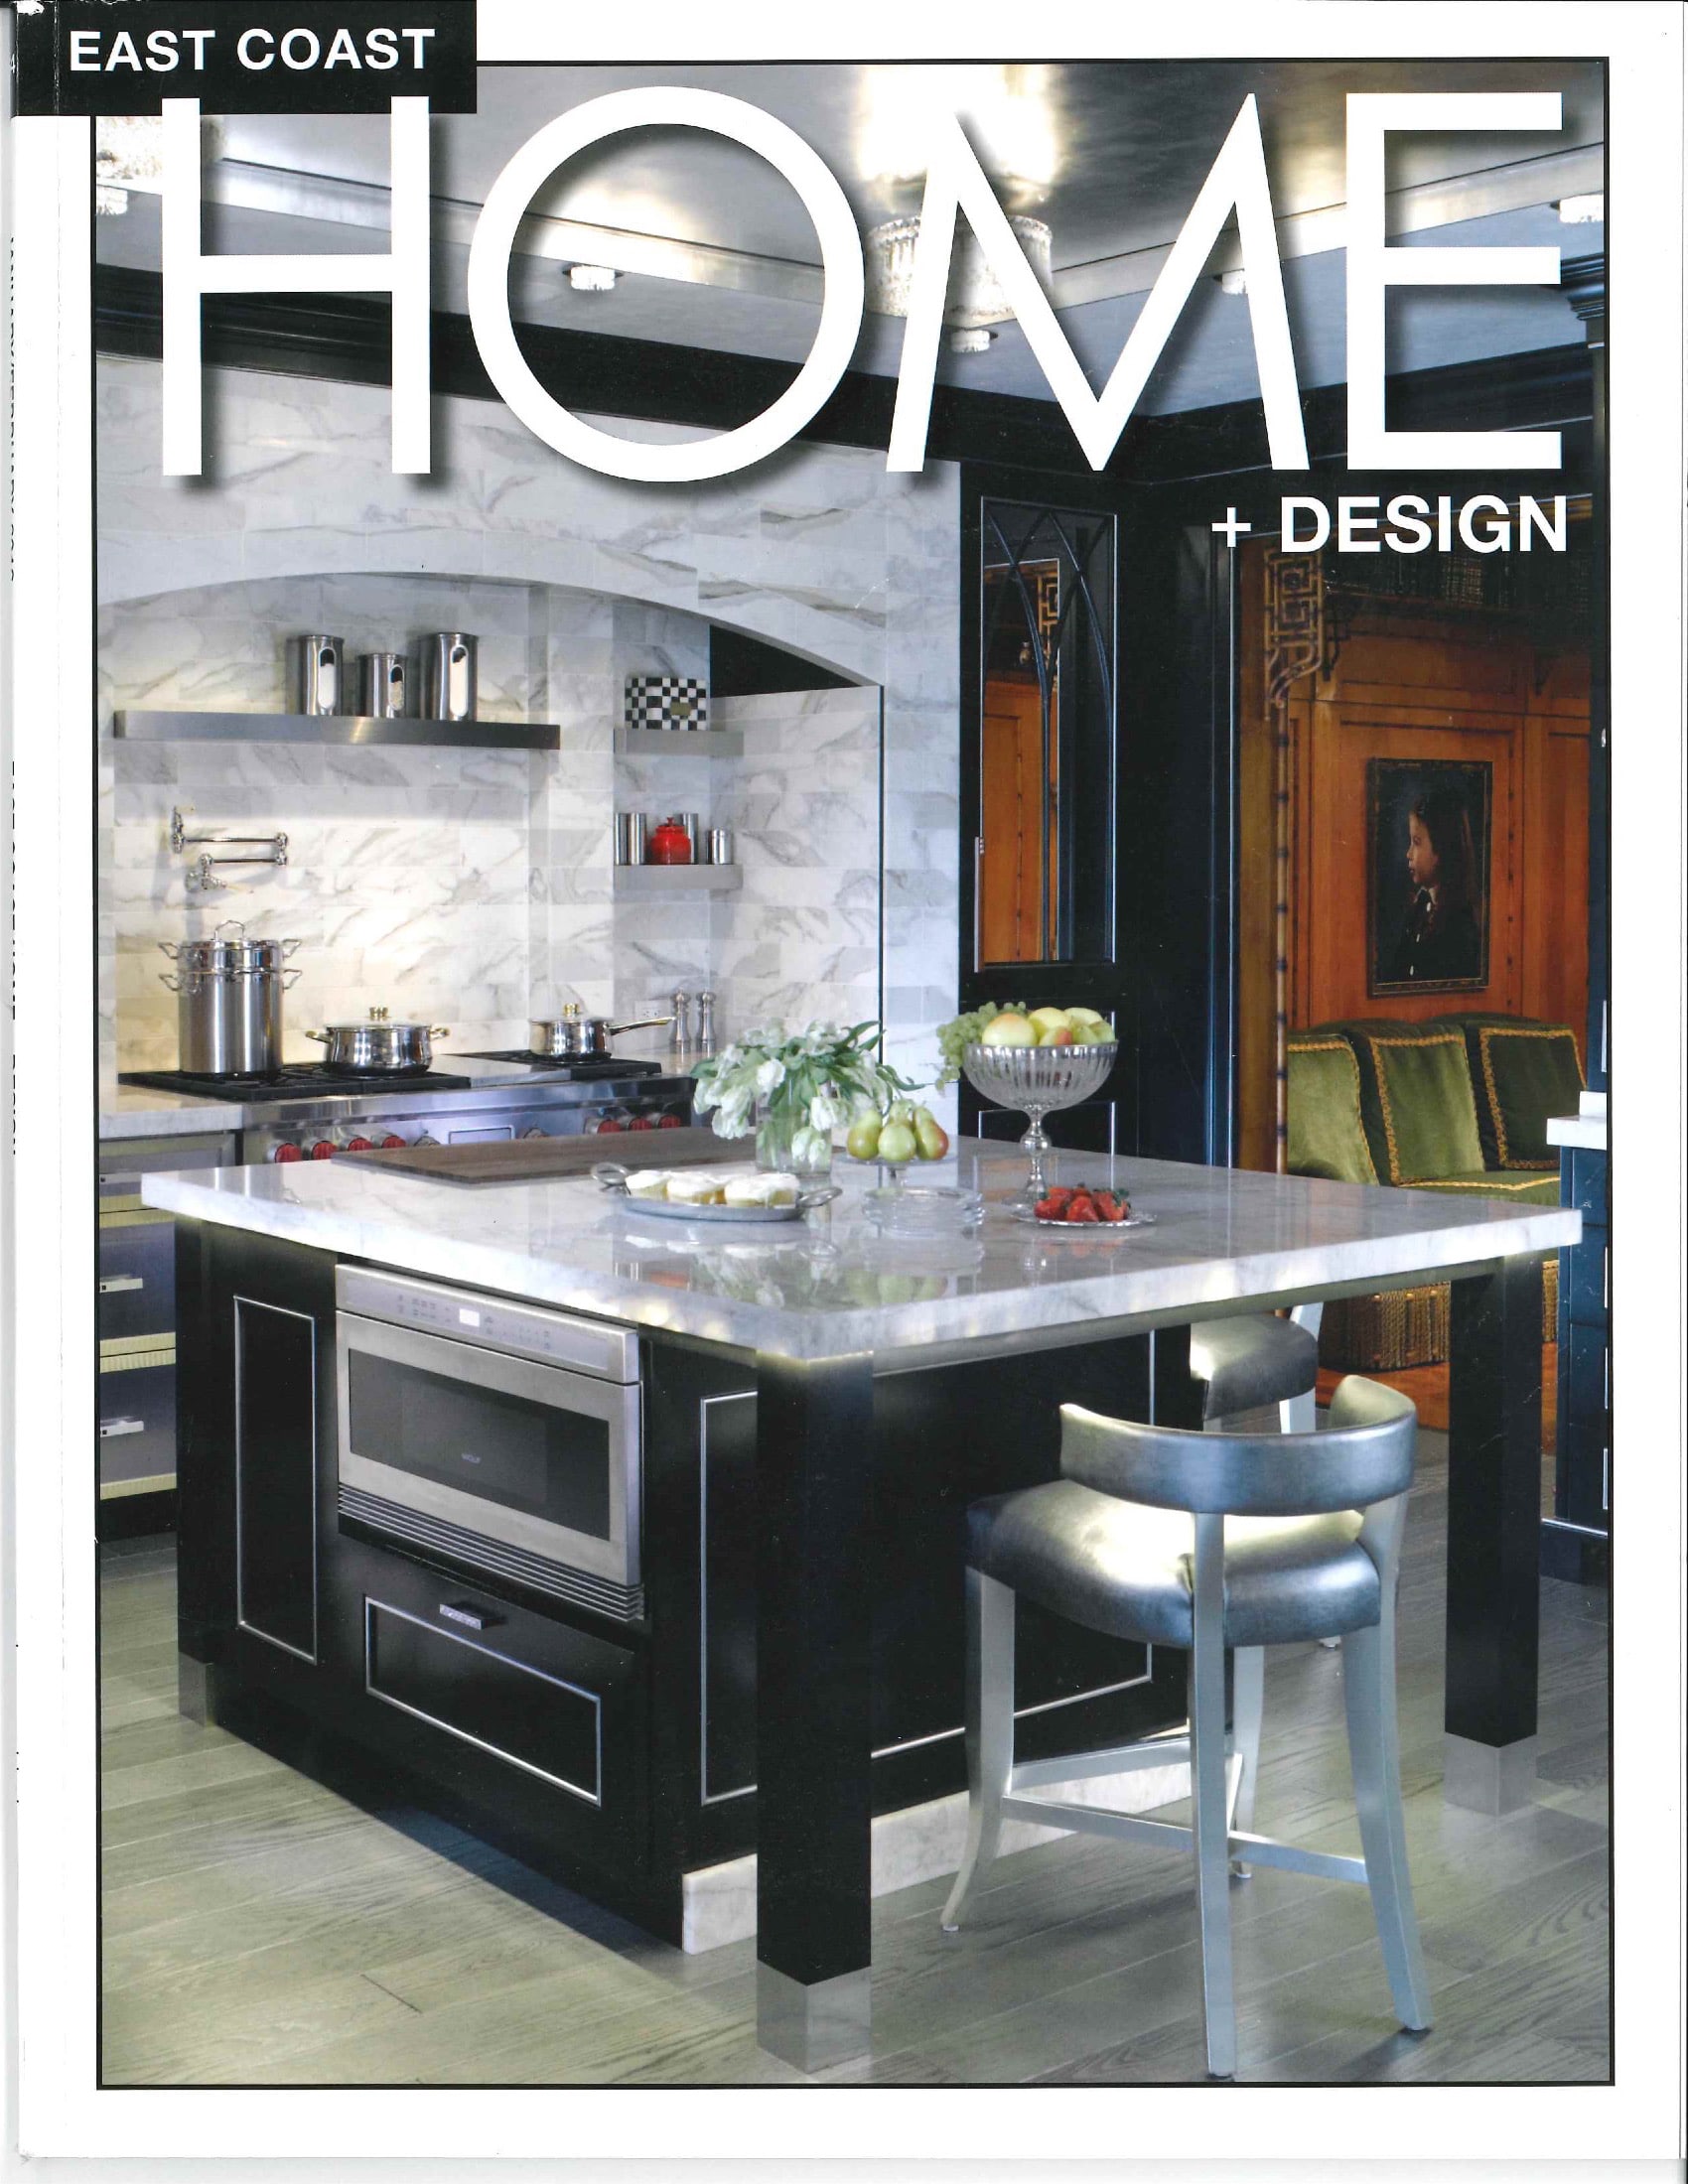 East Coast Home + Design - February 2015